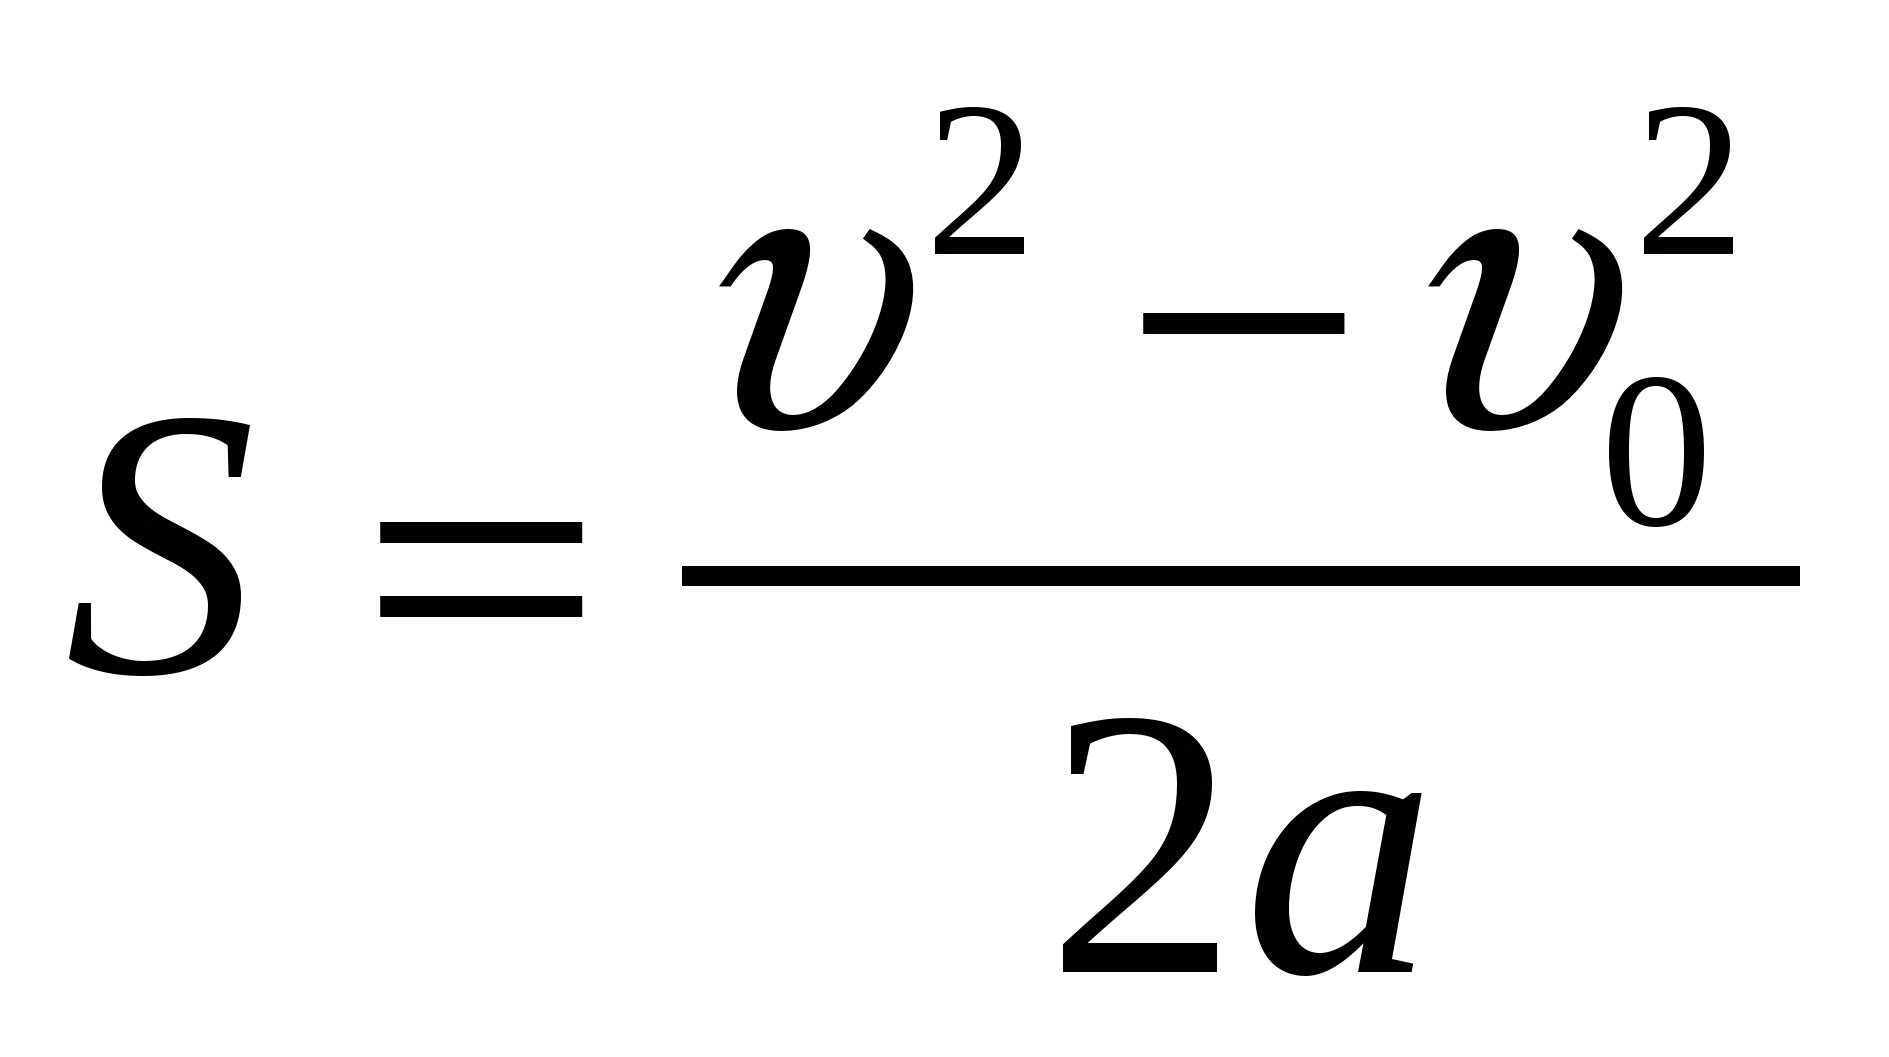 S v2 v02/2a. S V 2-v0 2/2a. V2-v2/2a. Безвременная формула перемещения.